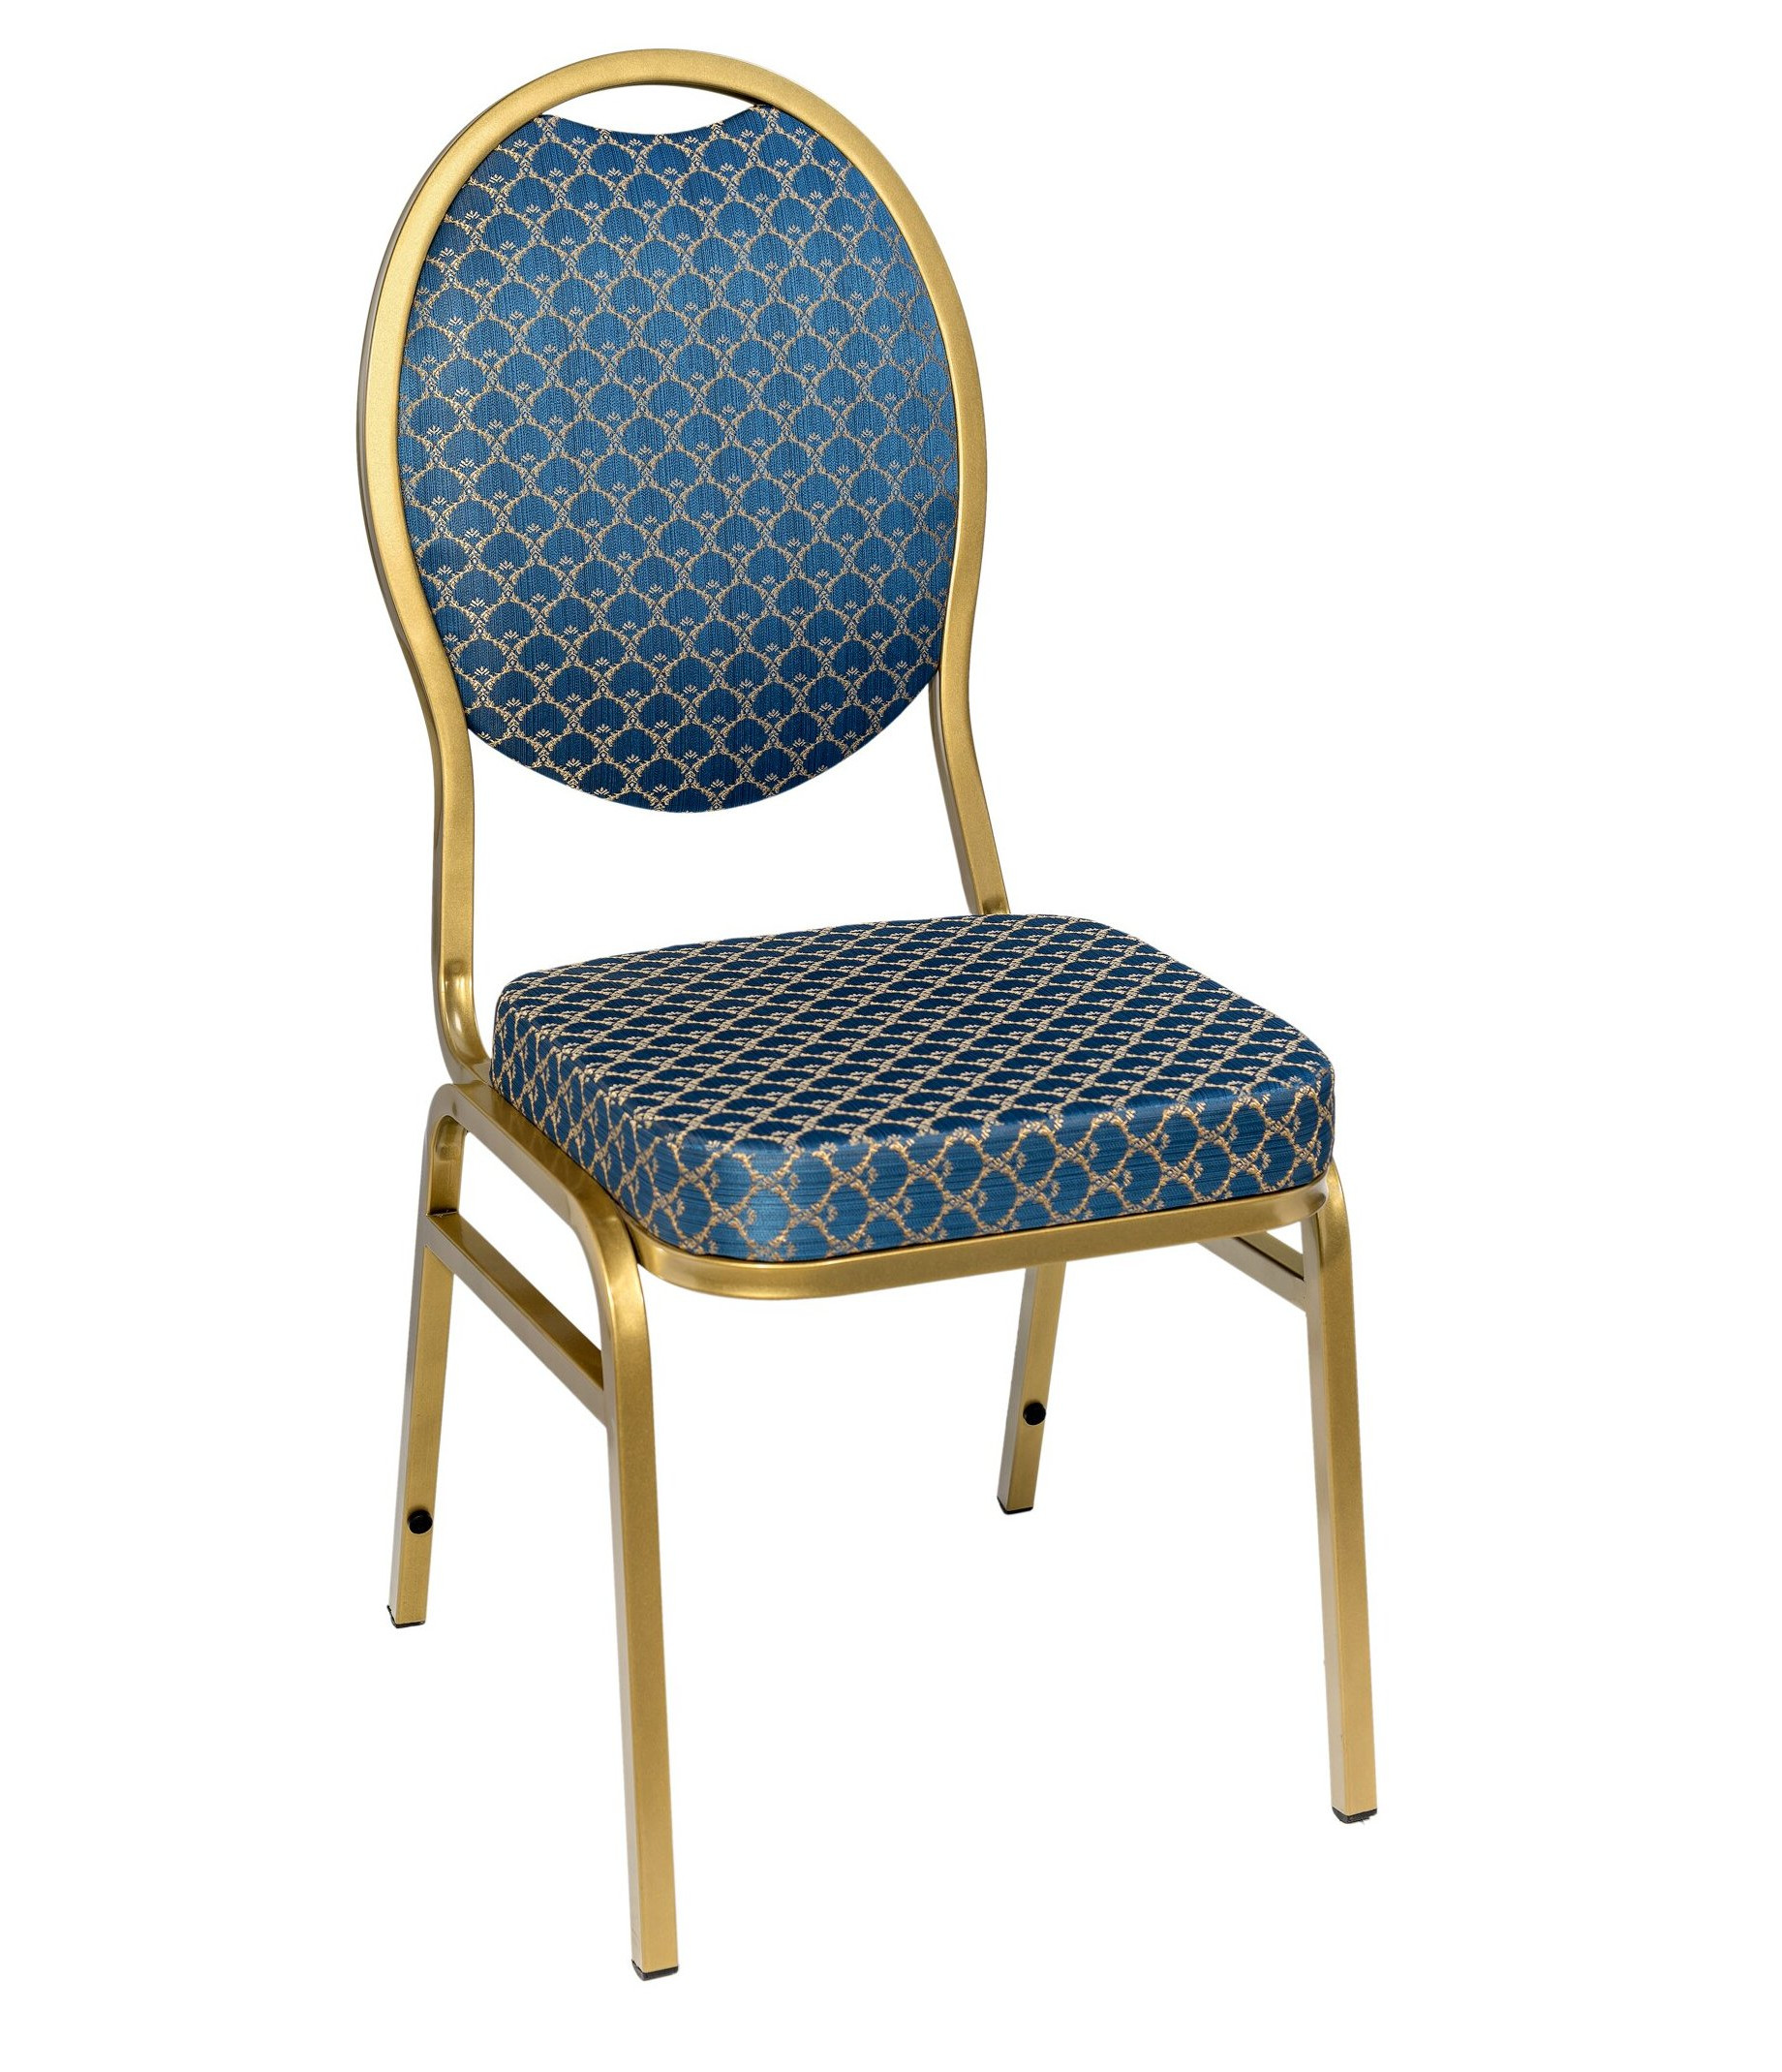 Банкетный стул Квин 20мм золотой, синий арш